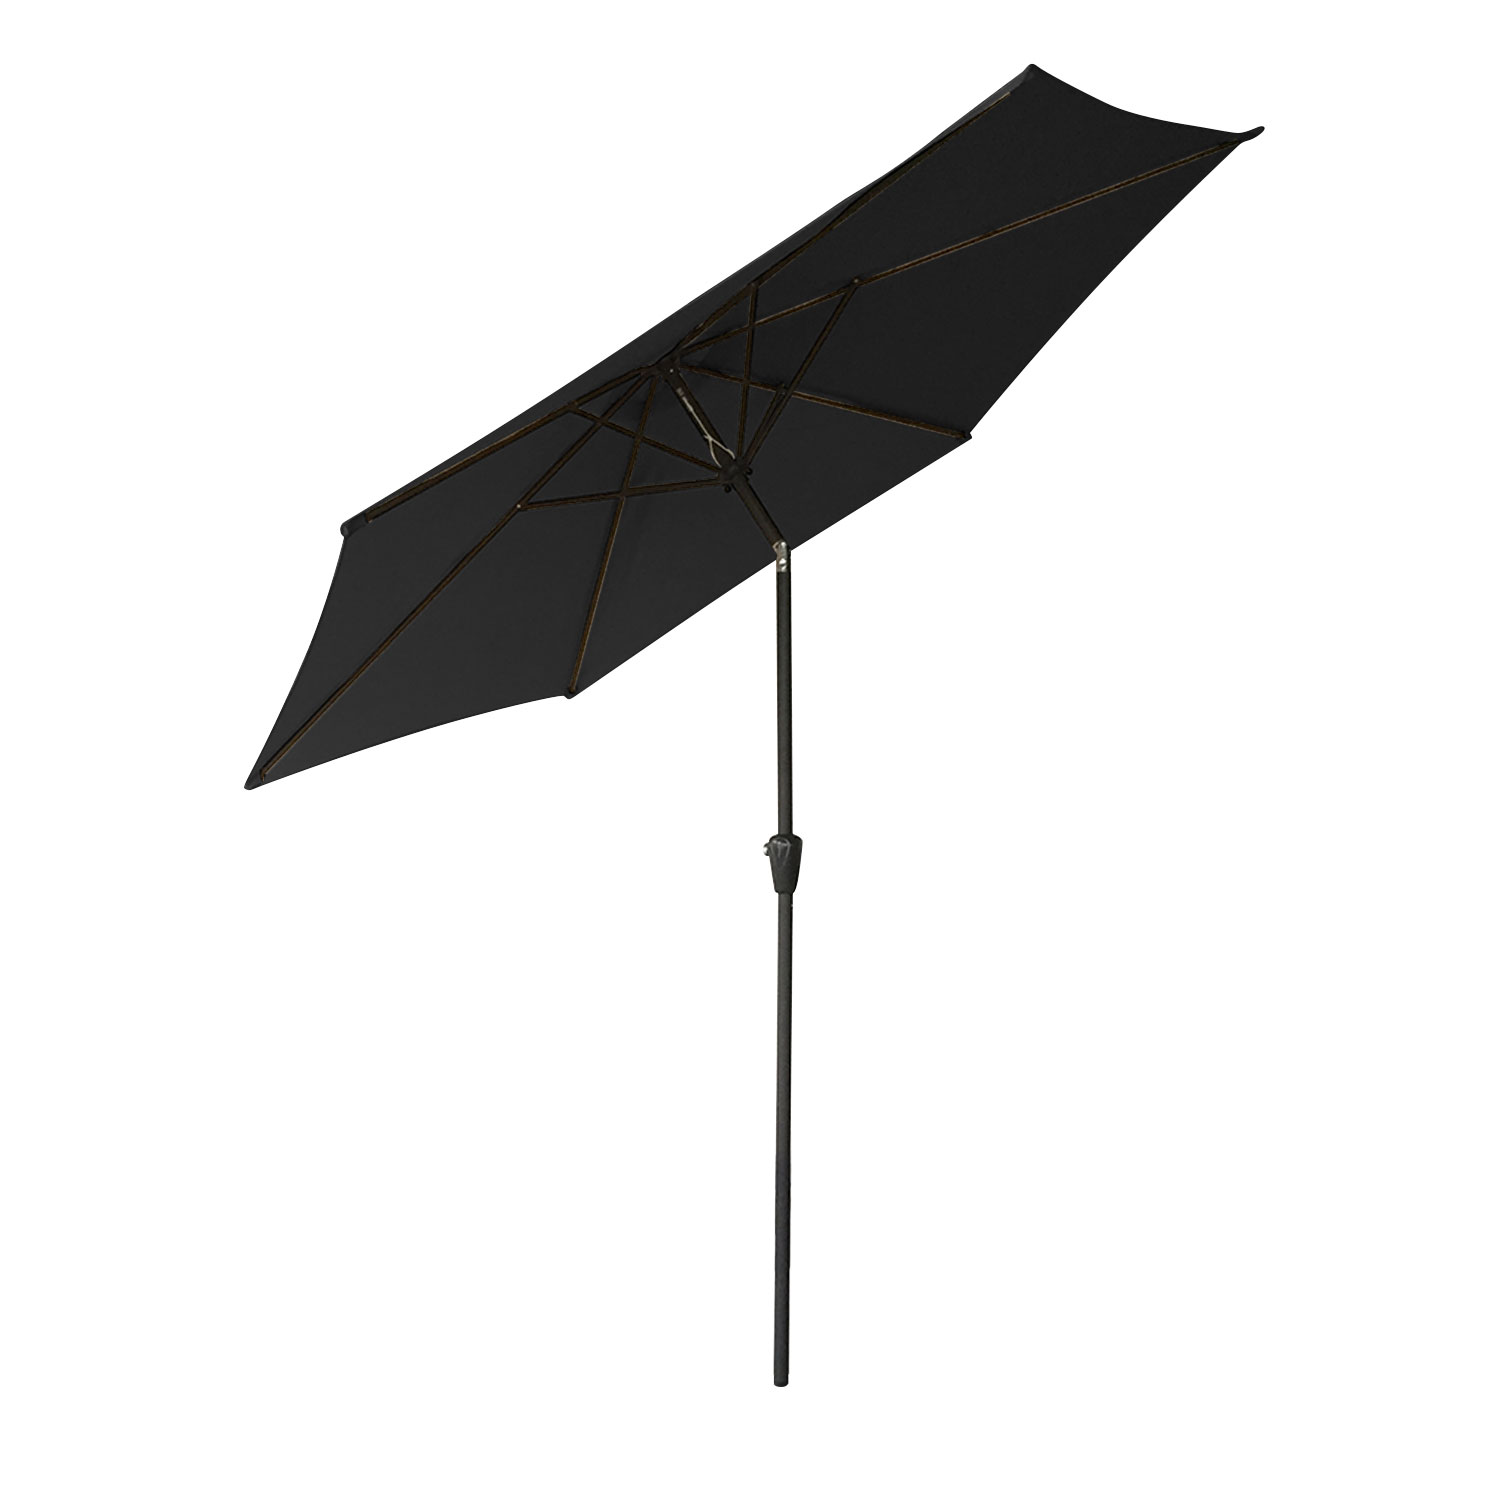 HAPUNA rechte ronde paraplu 2,70m diameter zwart